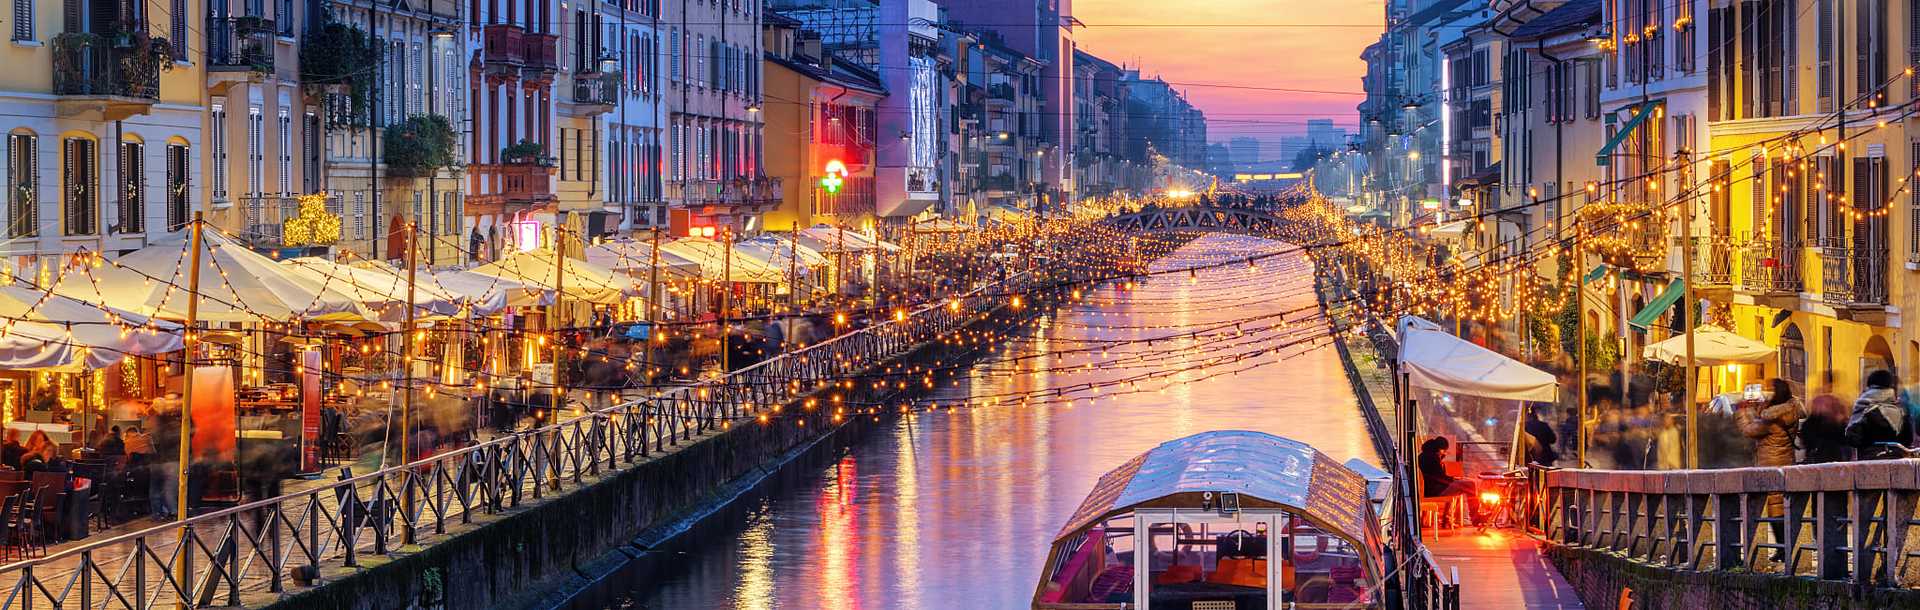 Naviglio Grande Canal in Milan, Italy